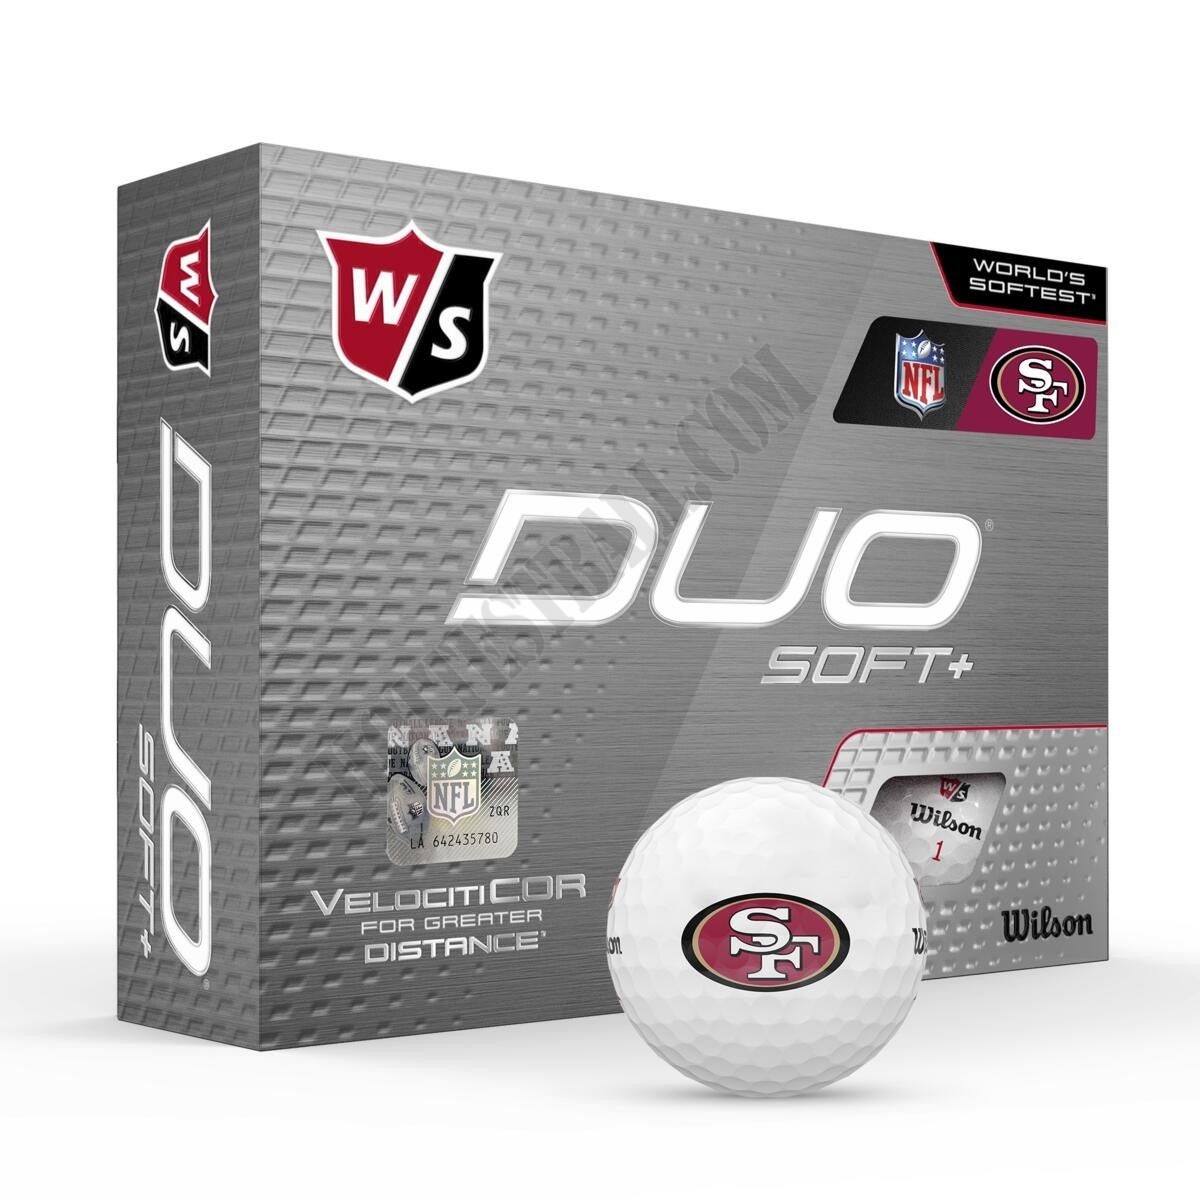 Duo Soft+ NFL Golf Balls - San Francisco 49ers ● Wilson Promotions - Duo Soft+ NFL Golf Balls - San Francisco 49ers ● Wilson Promotions